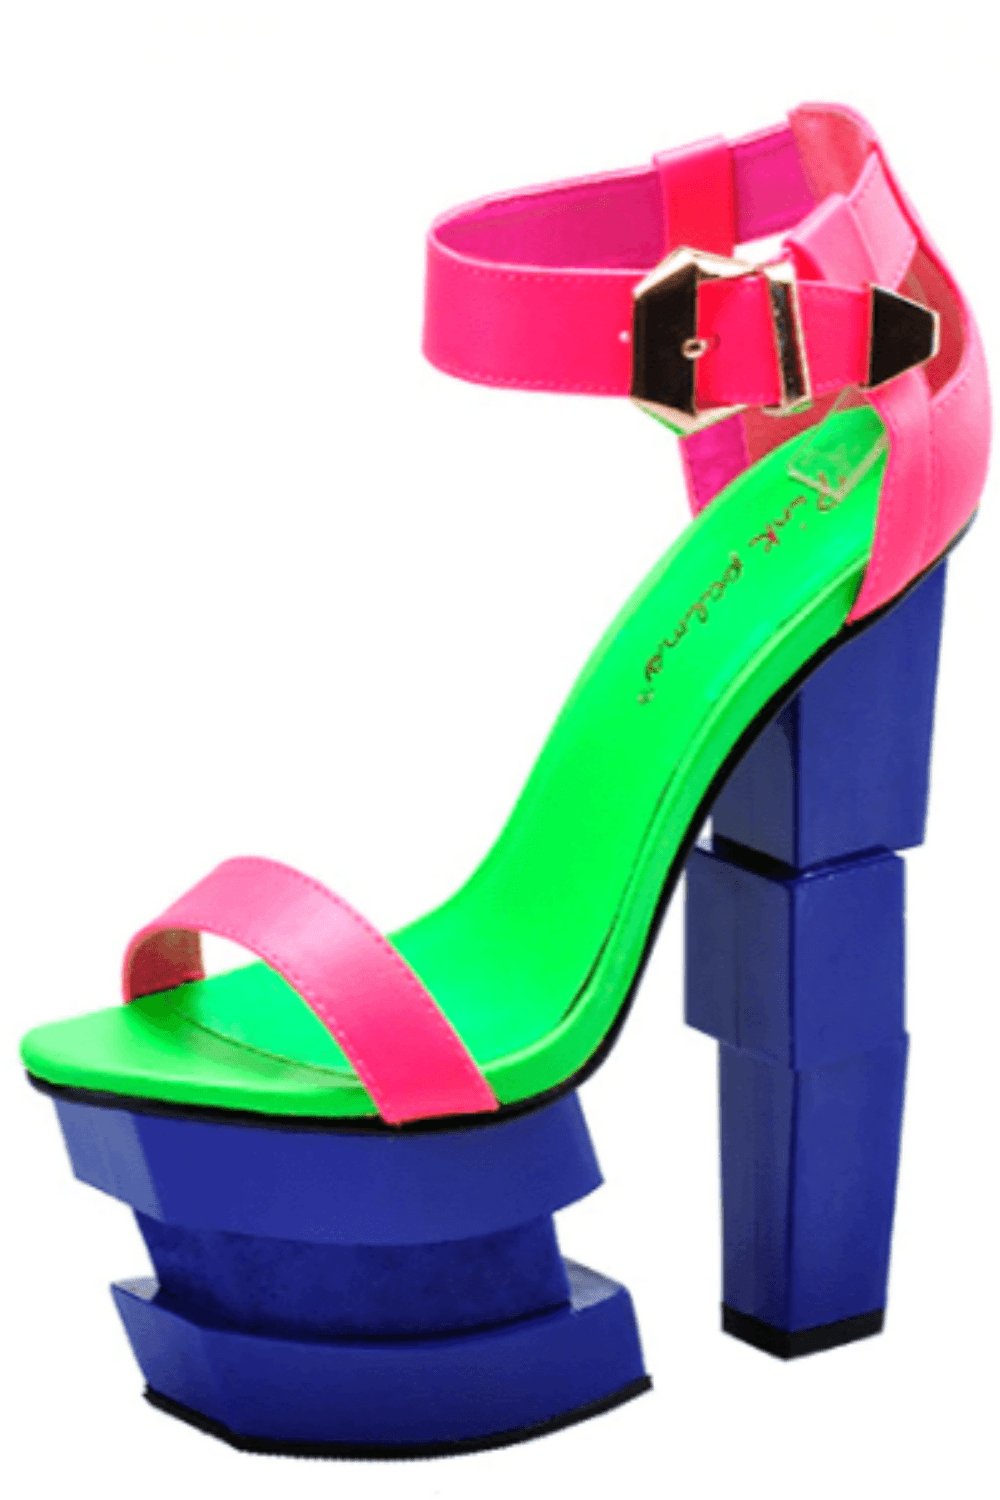 See You Soon Platform Heels - TGC Boutique - Multicolor Shoes